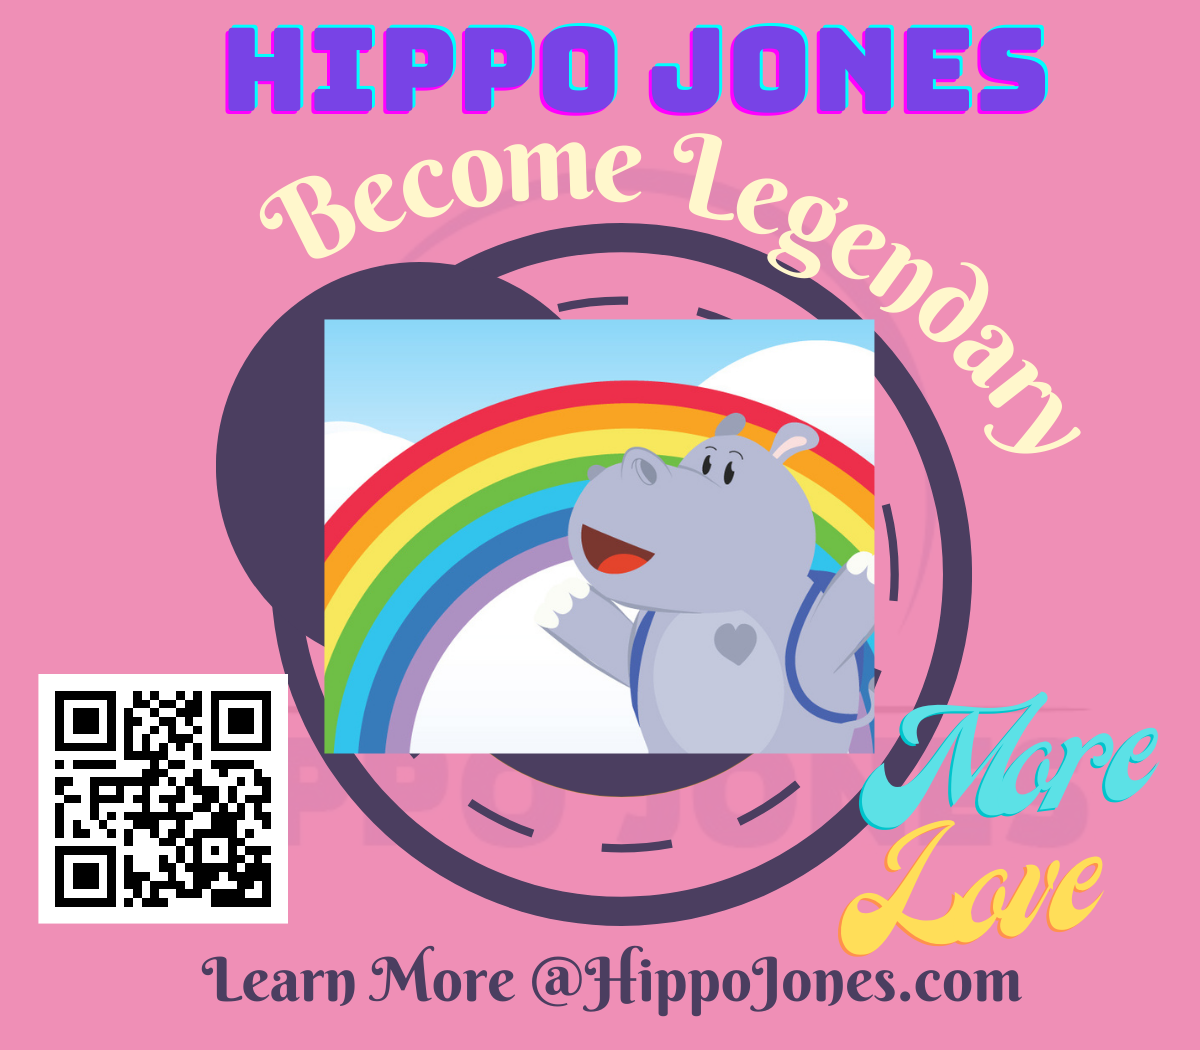 Hippo Jones Legend of the Largest Heart